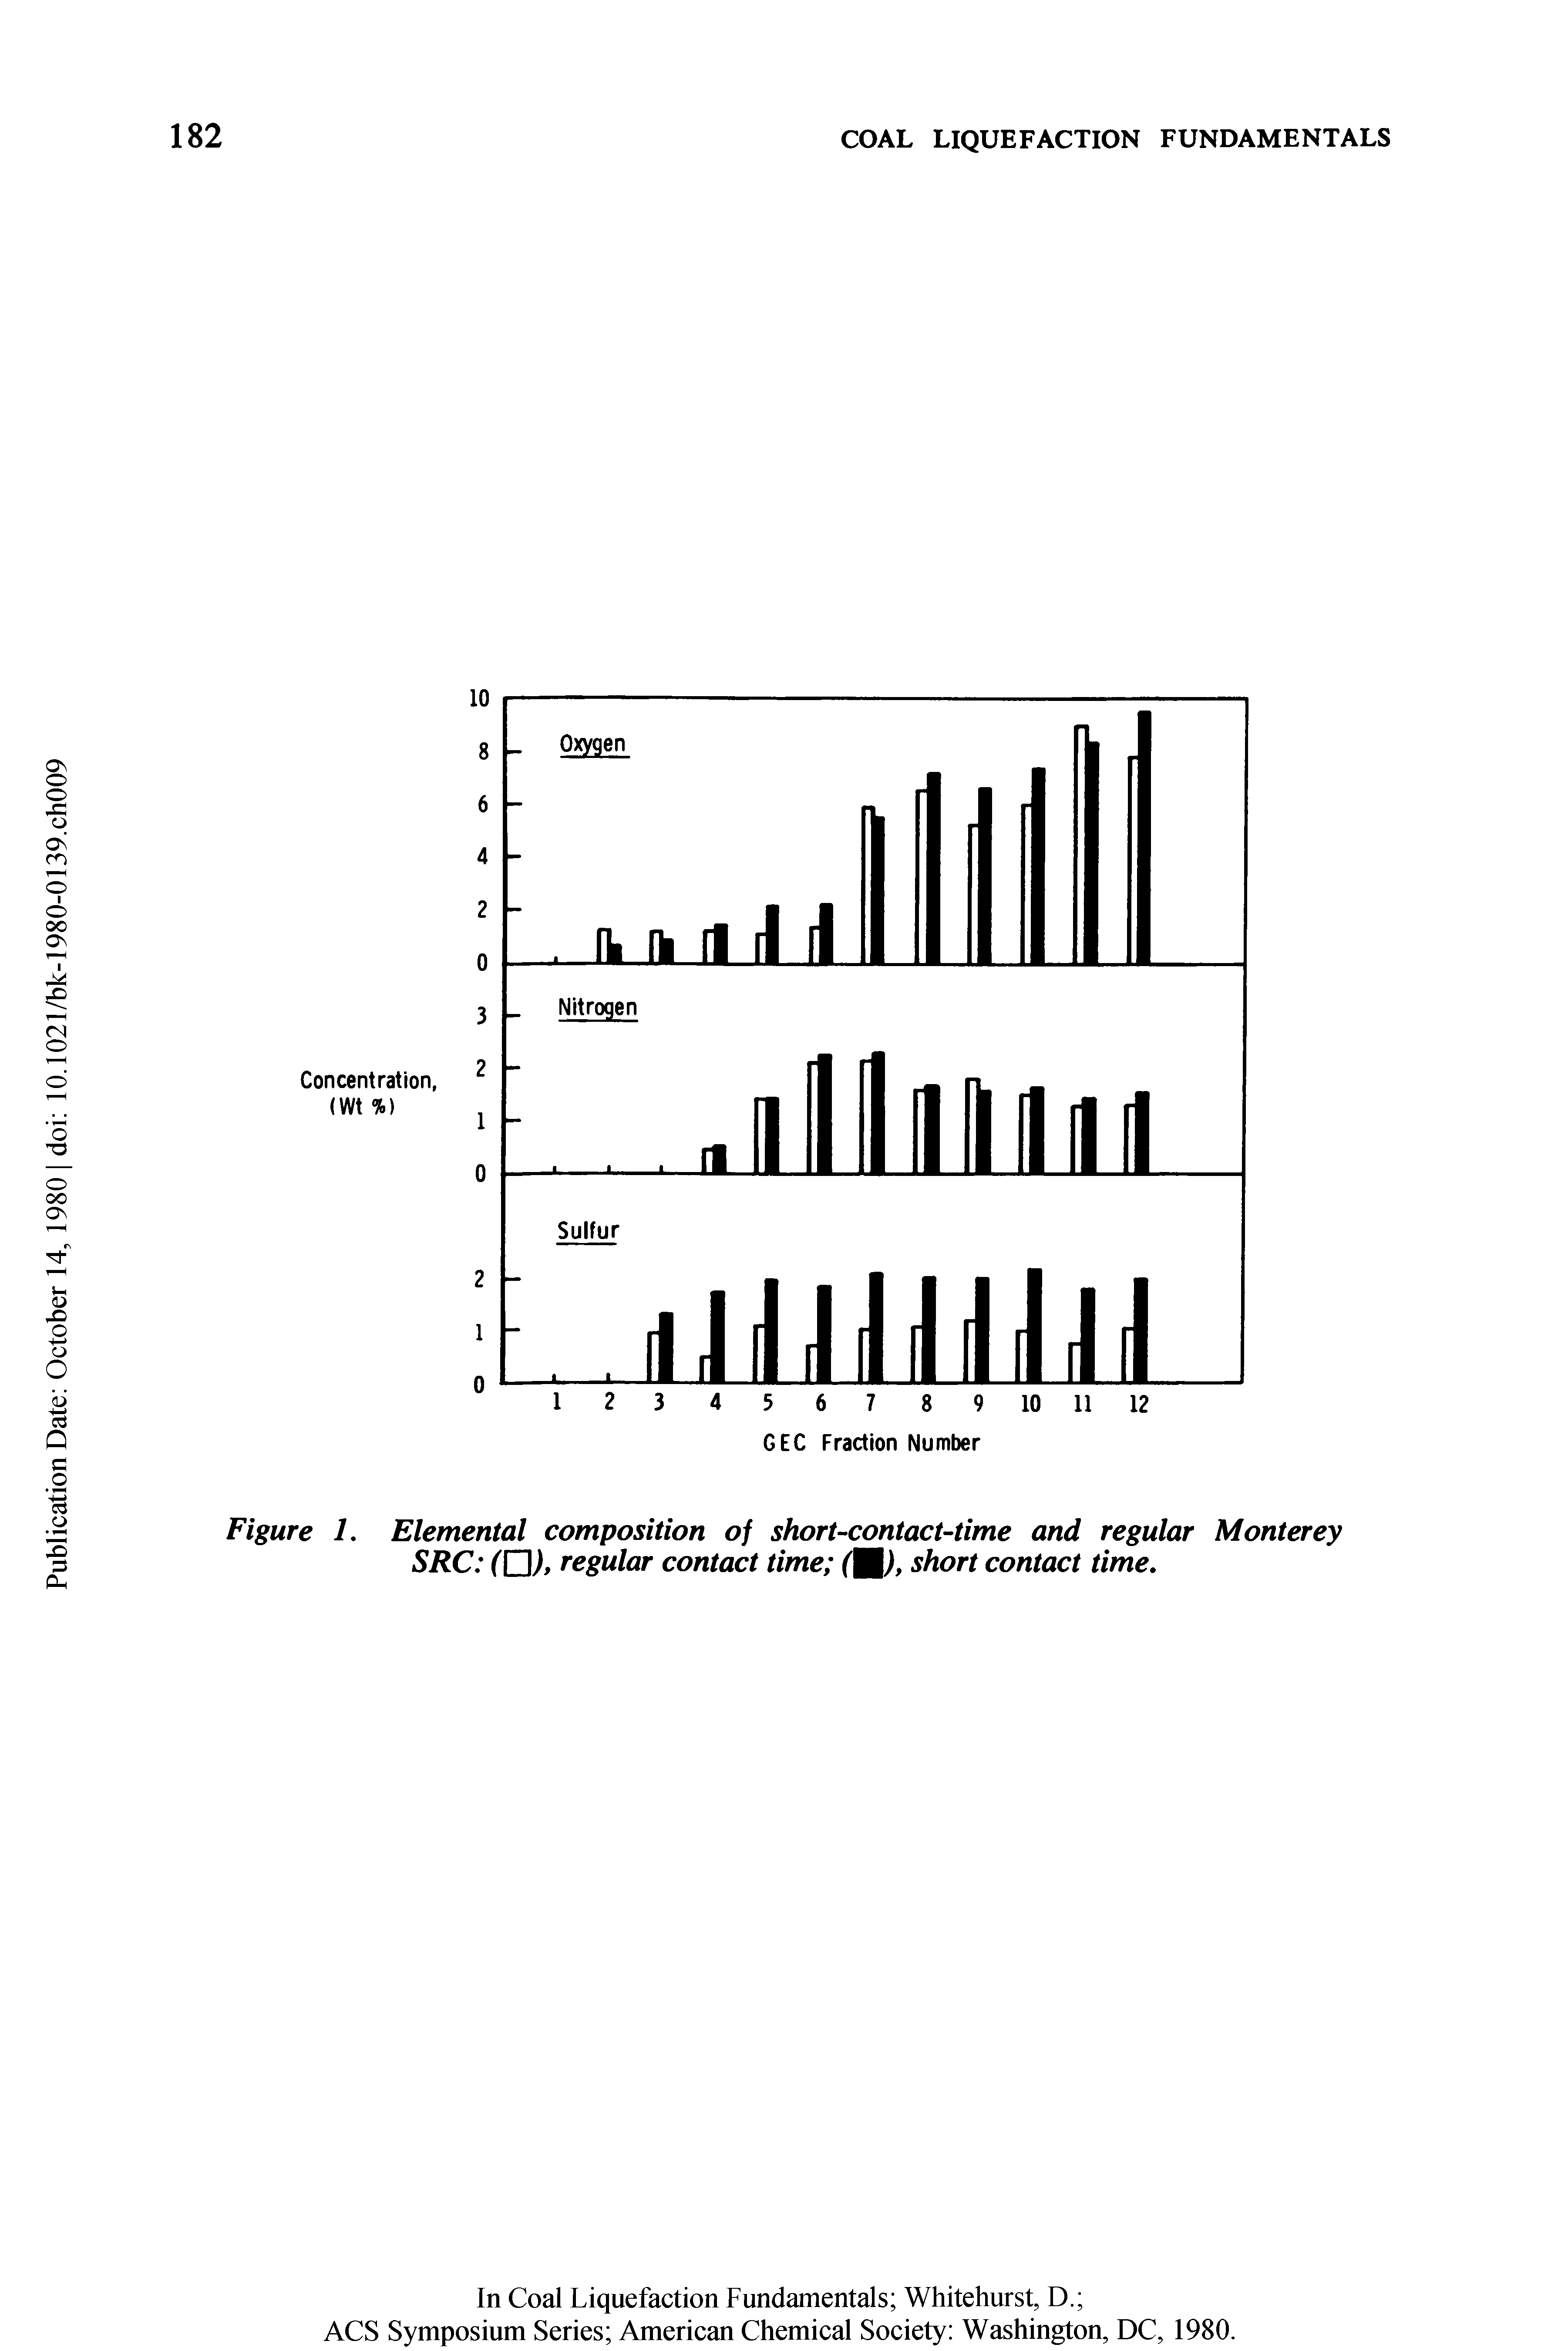 Figure 1. Elemental composition of short-contact-time and regular Monterey SRC (C )> regular contact time short contact time.